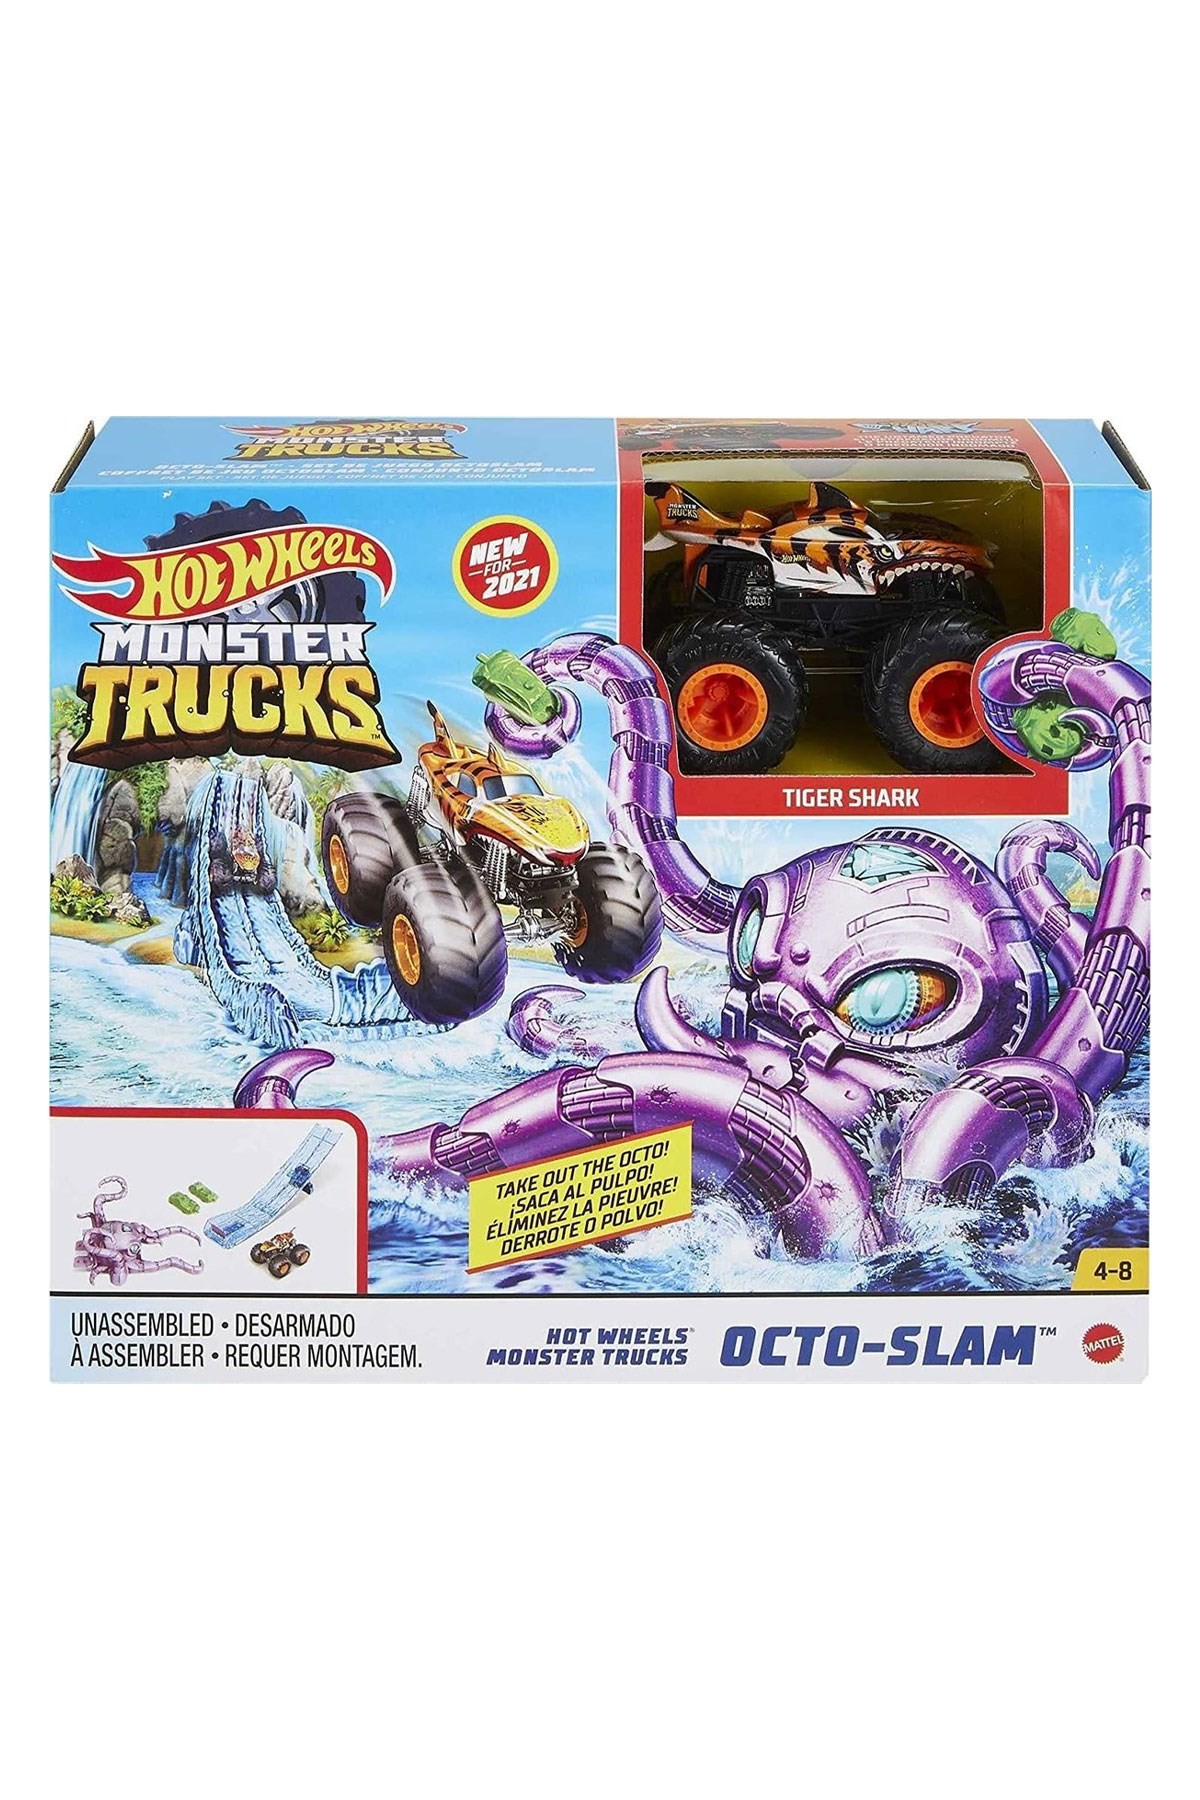 Hot Wheels Monster Trucks Octo-Slam Aksiyona Başlangıç Oyun Seti